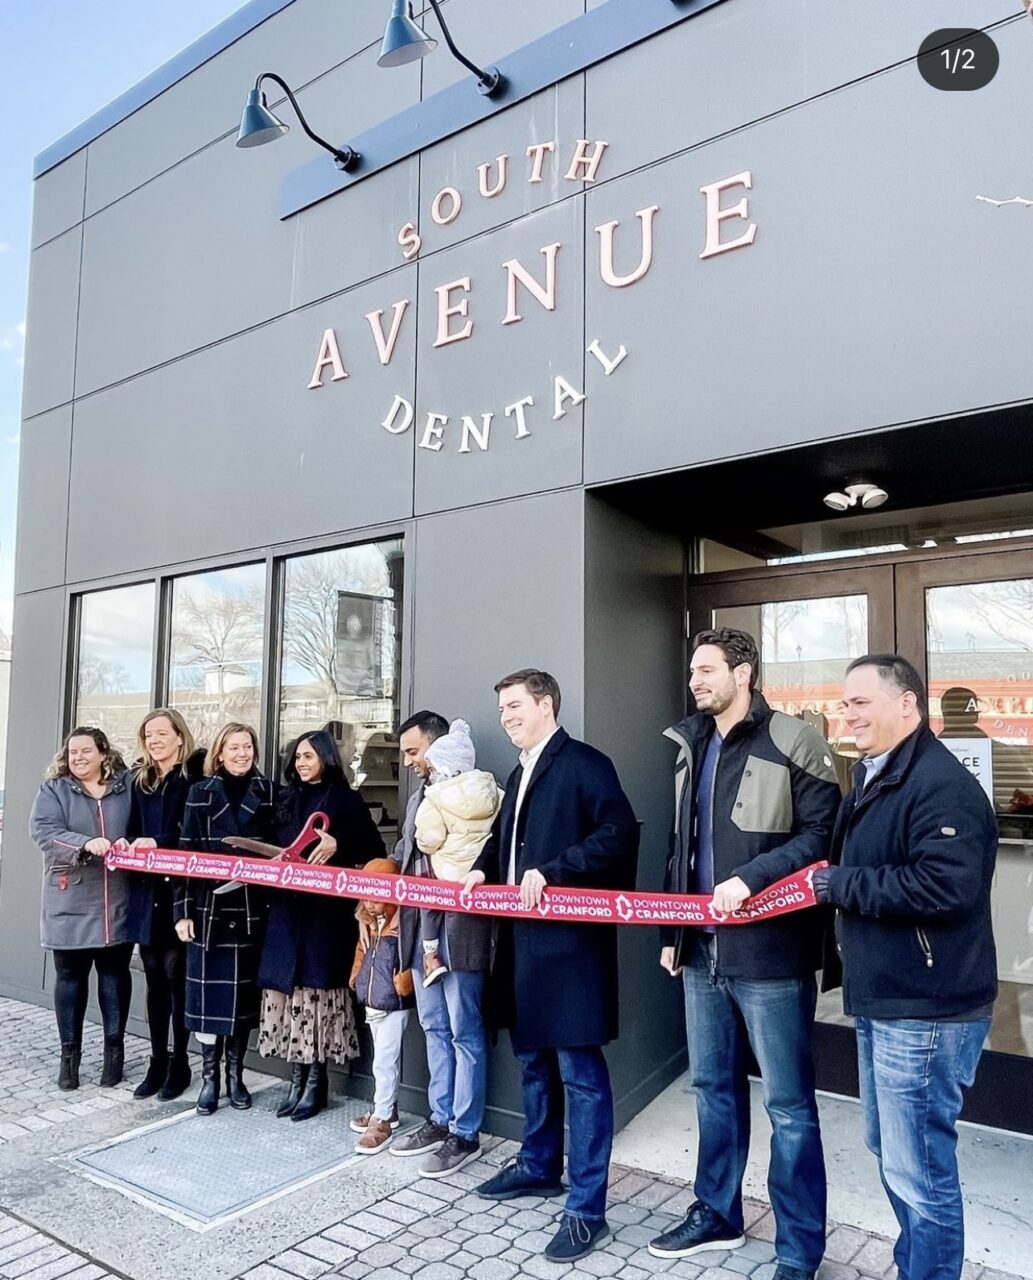 South Avenue Dental, Dr. Lajja Patel Opens South Avenue Dental in Cranford NJ